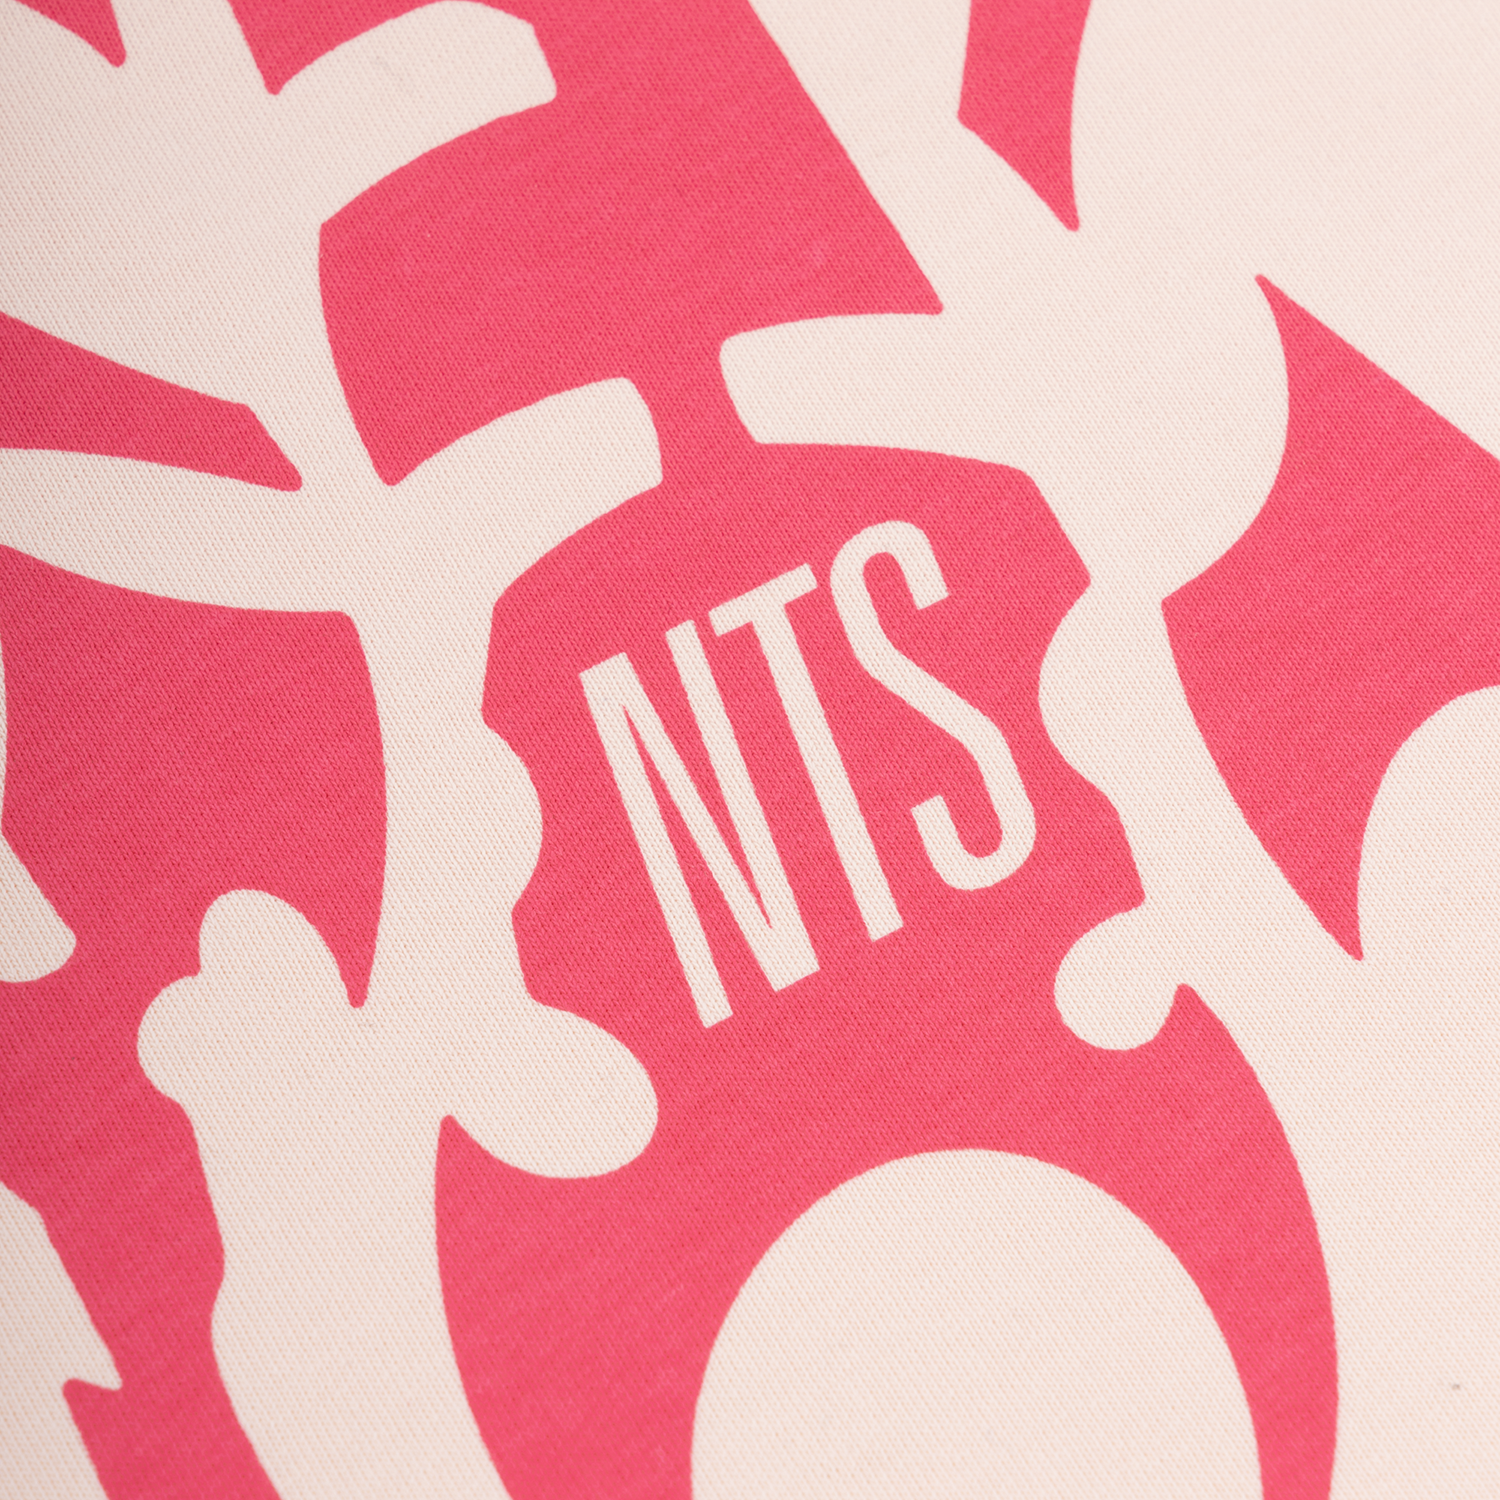 NTS RADIO - Scorpion Tee - Pink